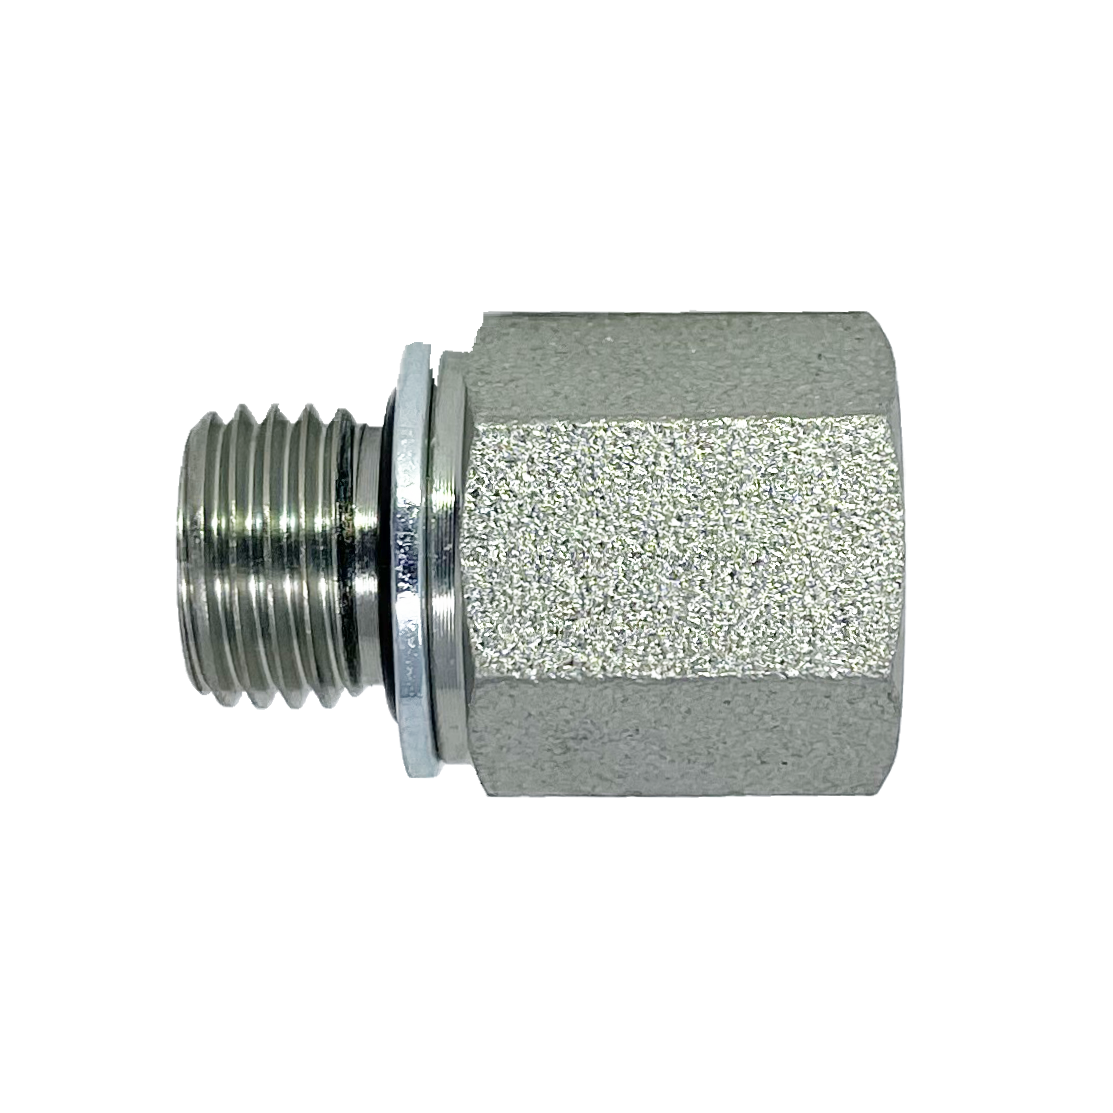 9635S-22-L15-12 : Adaptall Straight Adapter, Male L15 DIN Tube x Female 0.75 (3/4") NPT, Carbon Steel